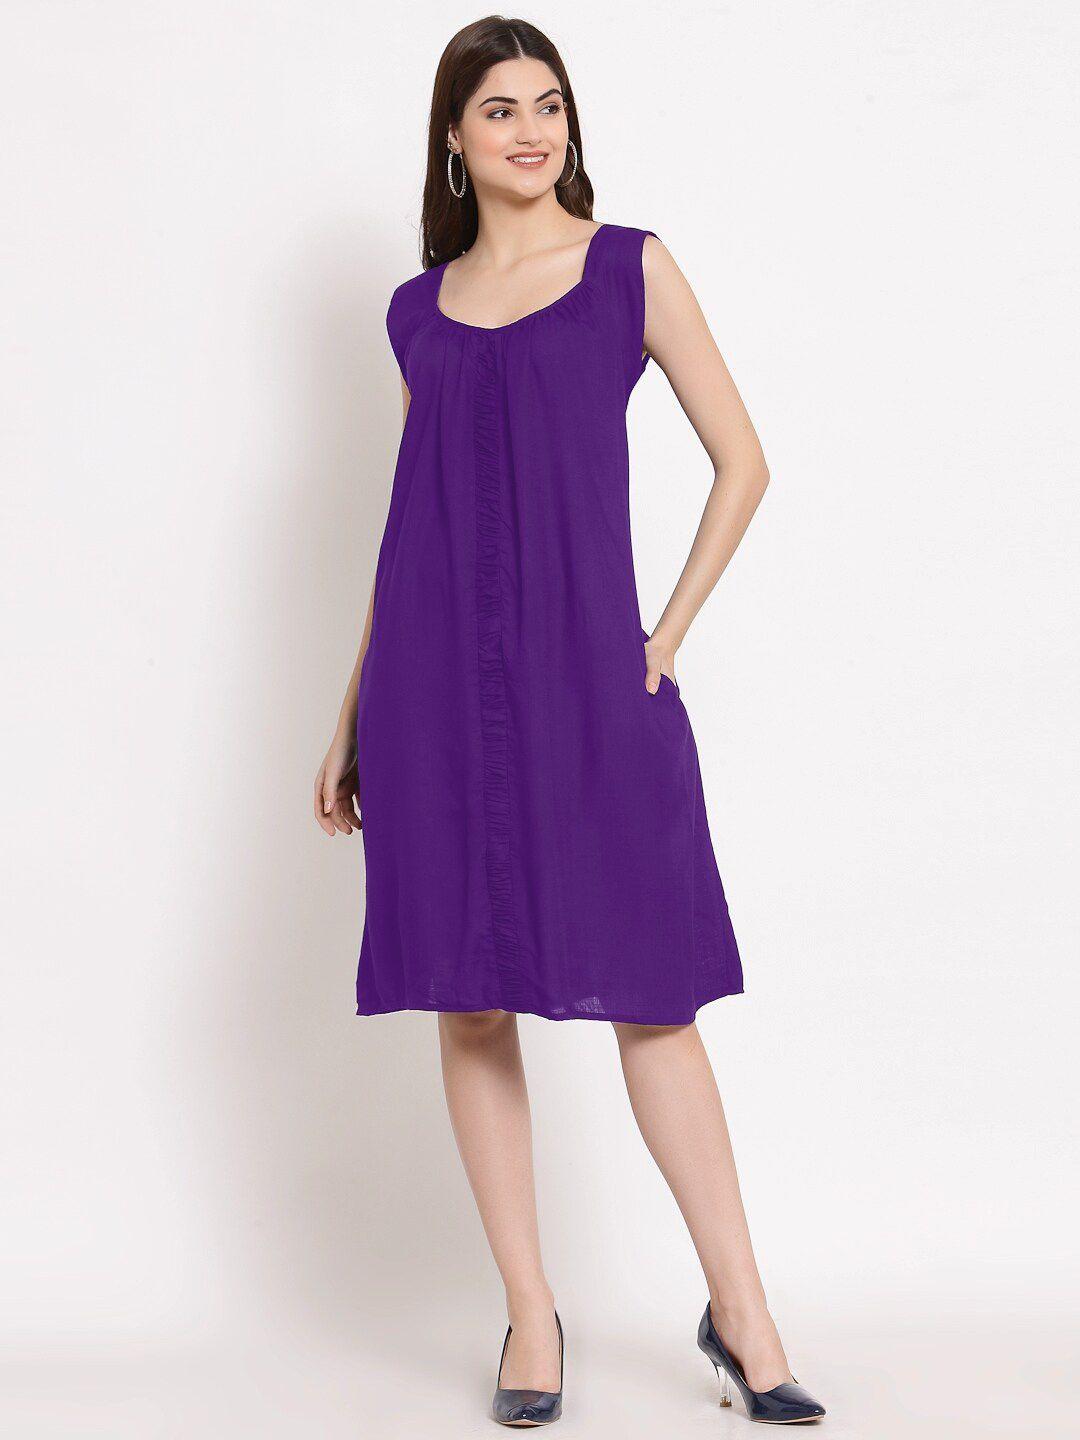 patrorna women purple nightdress